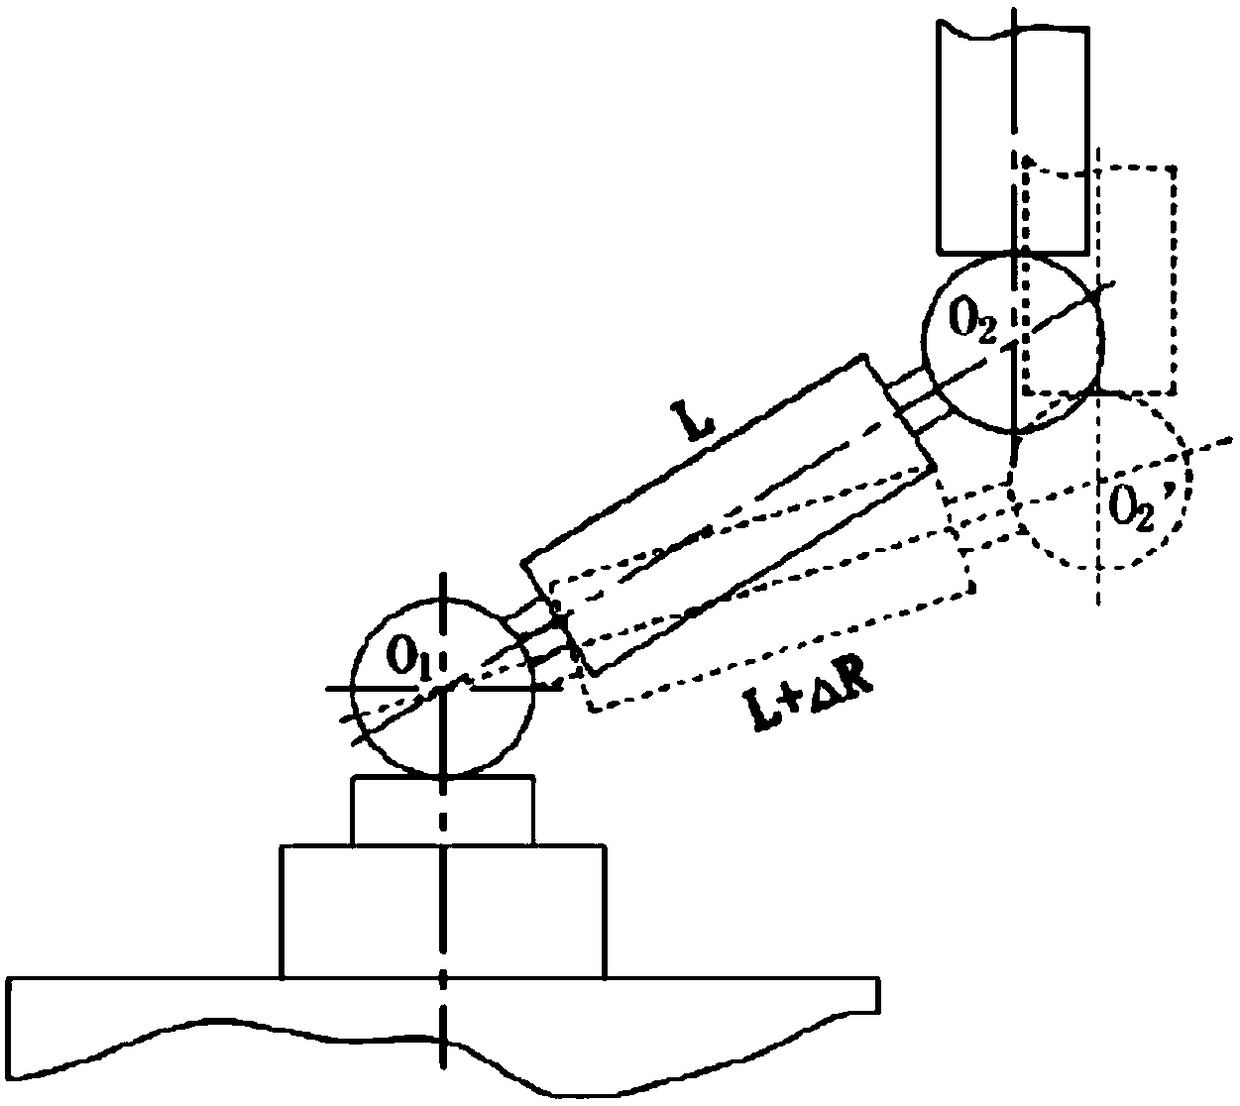 Five-axis numerical control machine tool space error distinguishing method